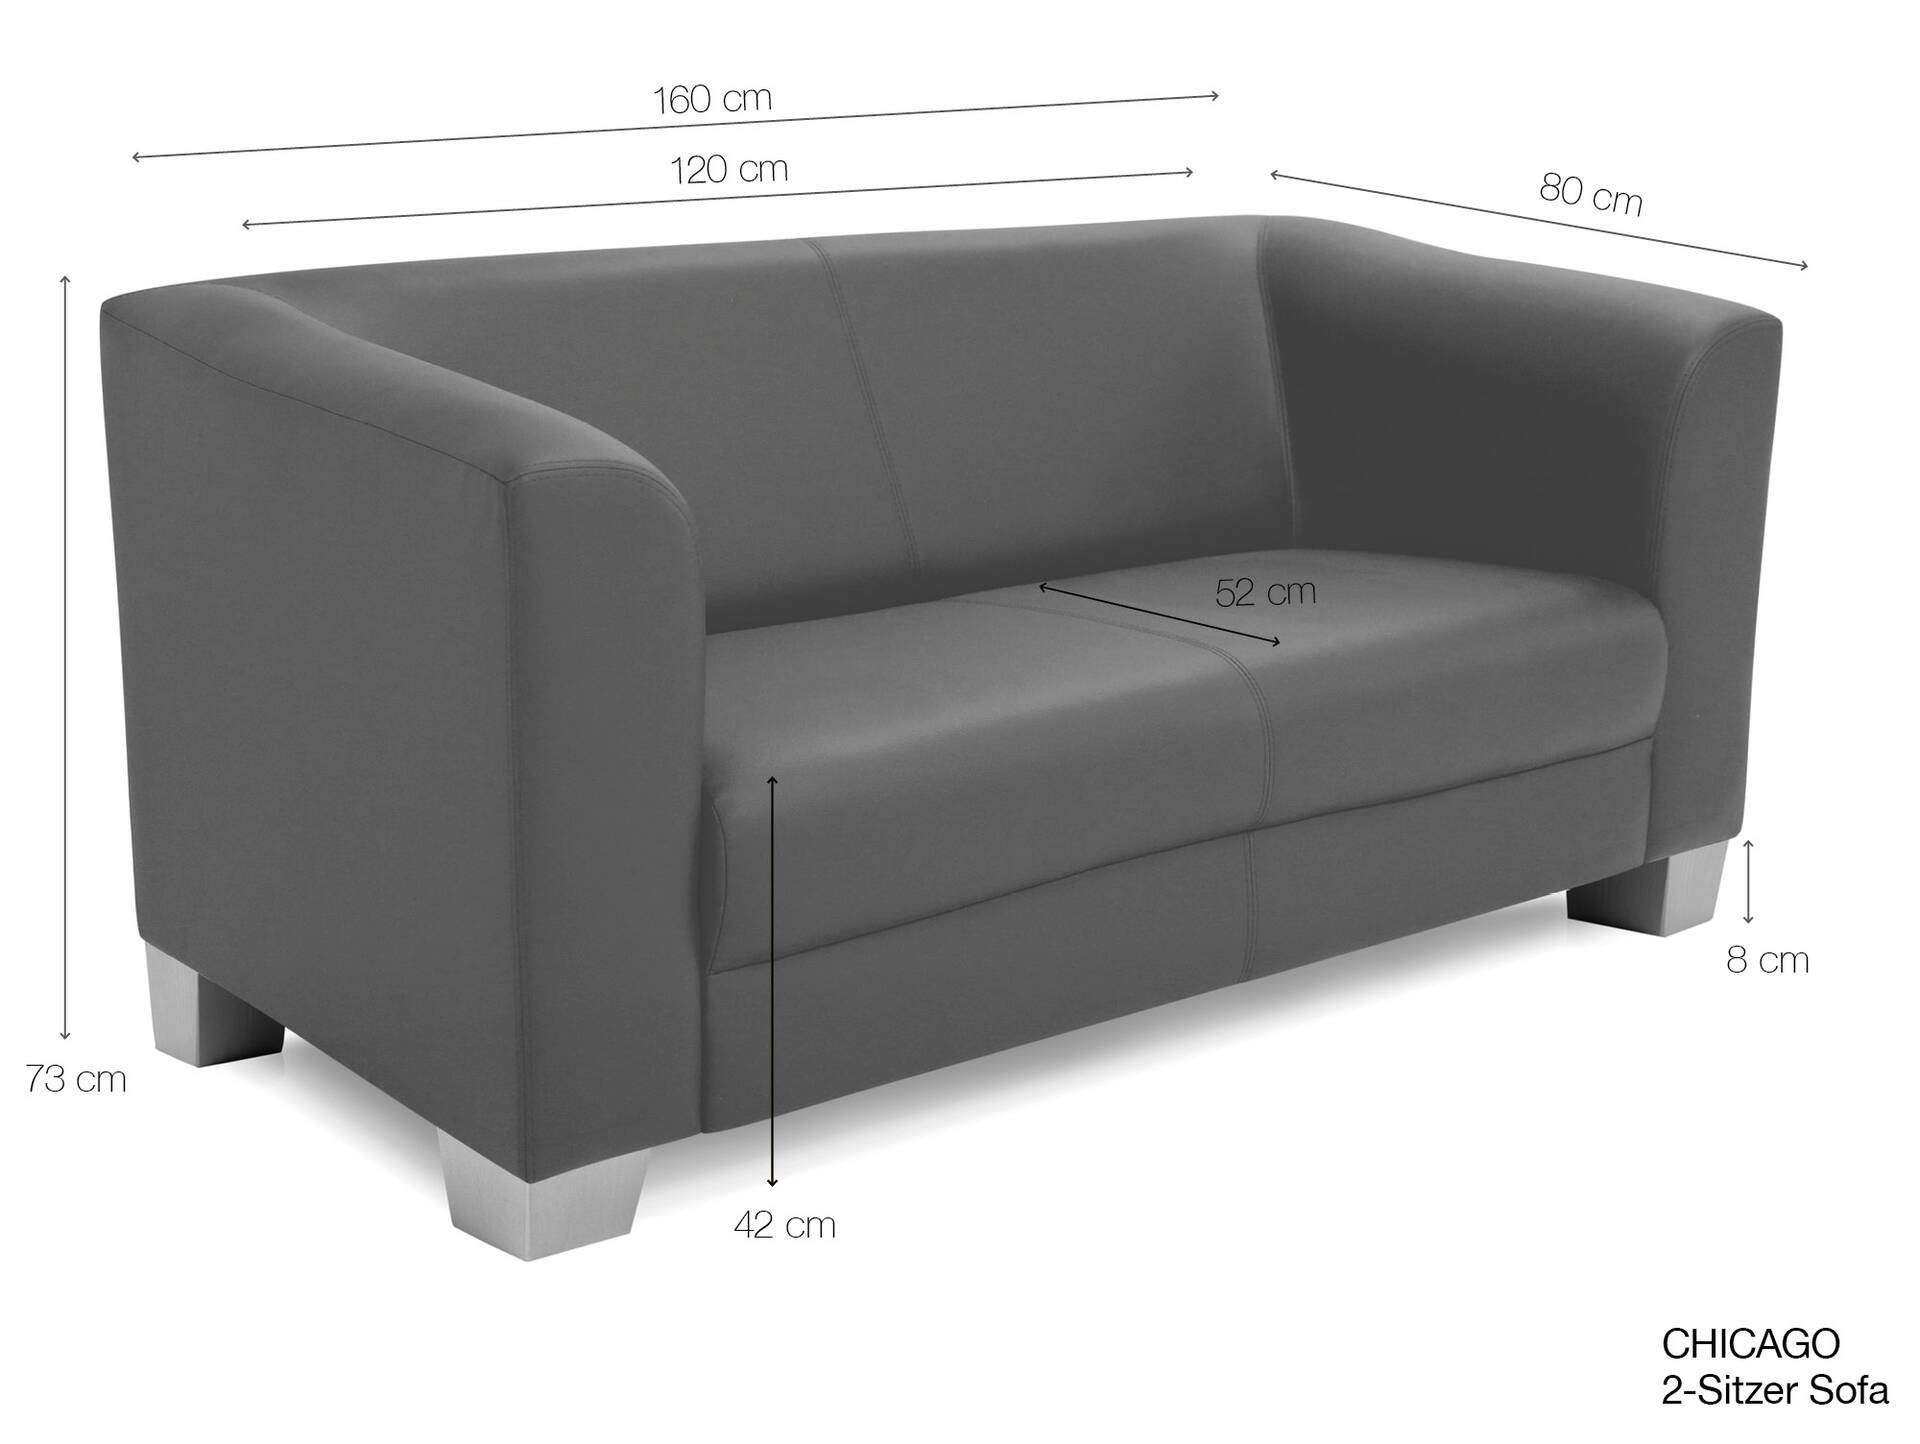 CHICAGO 20 Sitzer Sofa, Material Kunstleder orange